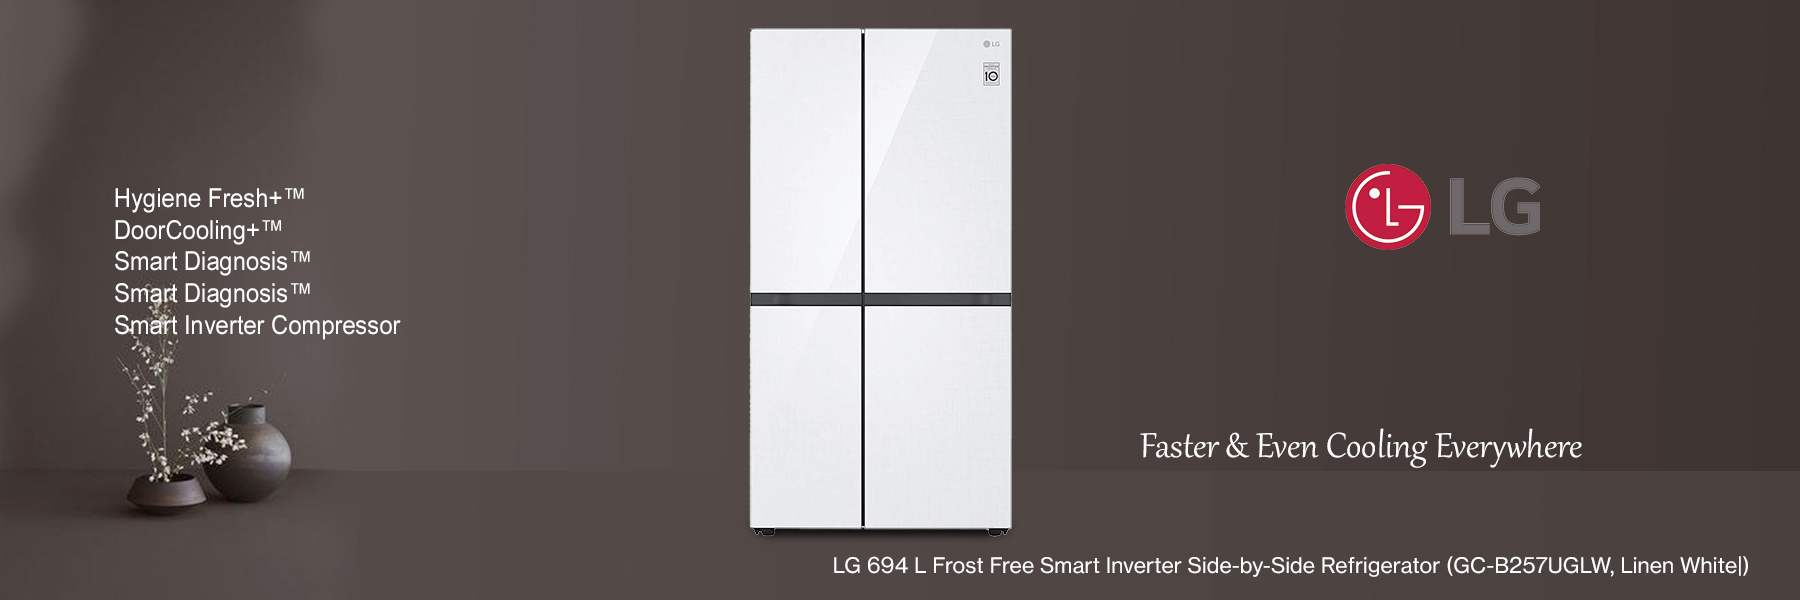 LG 694 L Frost Free Smart Inverter Side-by-Side Refrigerator (GC-B257UGLW, Linen White|)